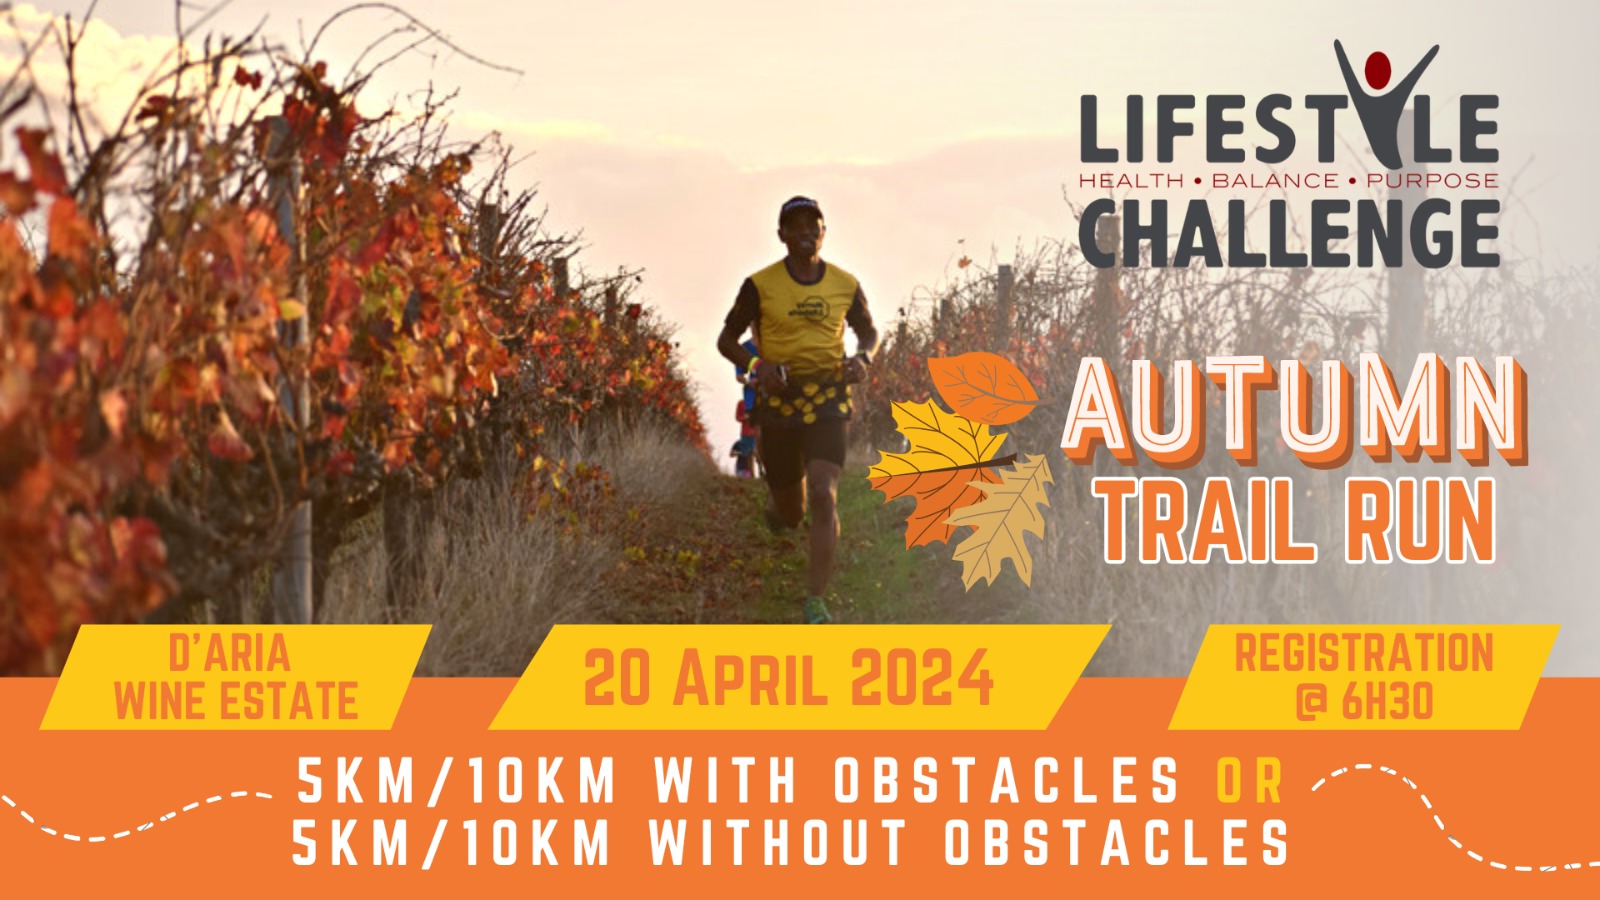 Lifestyle Challenge - Autumn Trail Run 2024